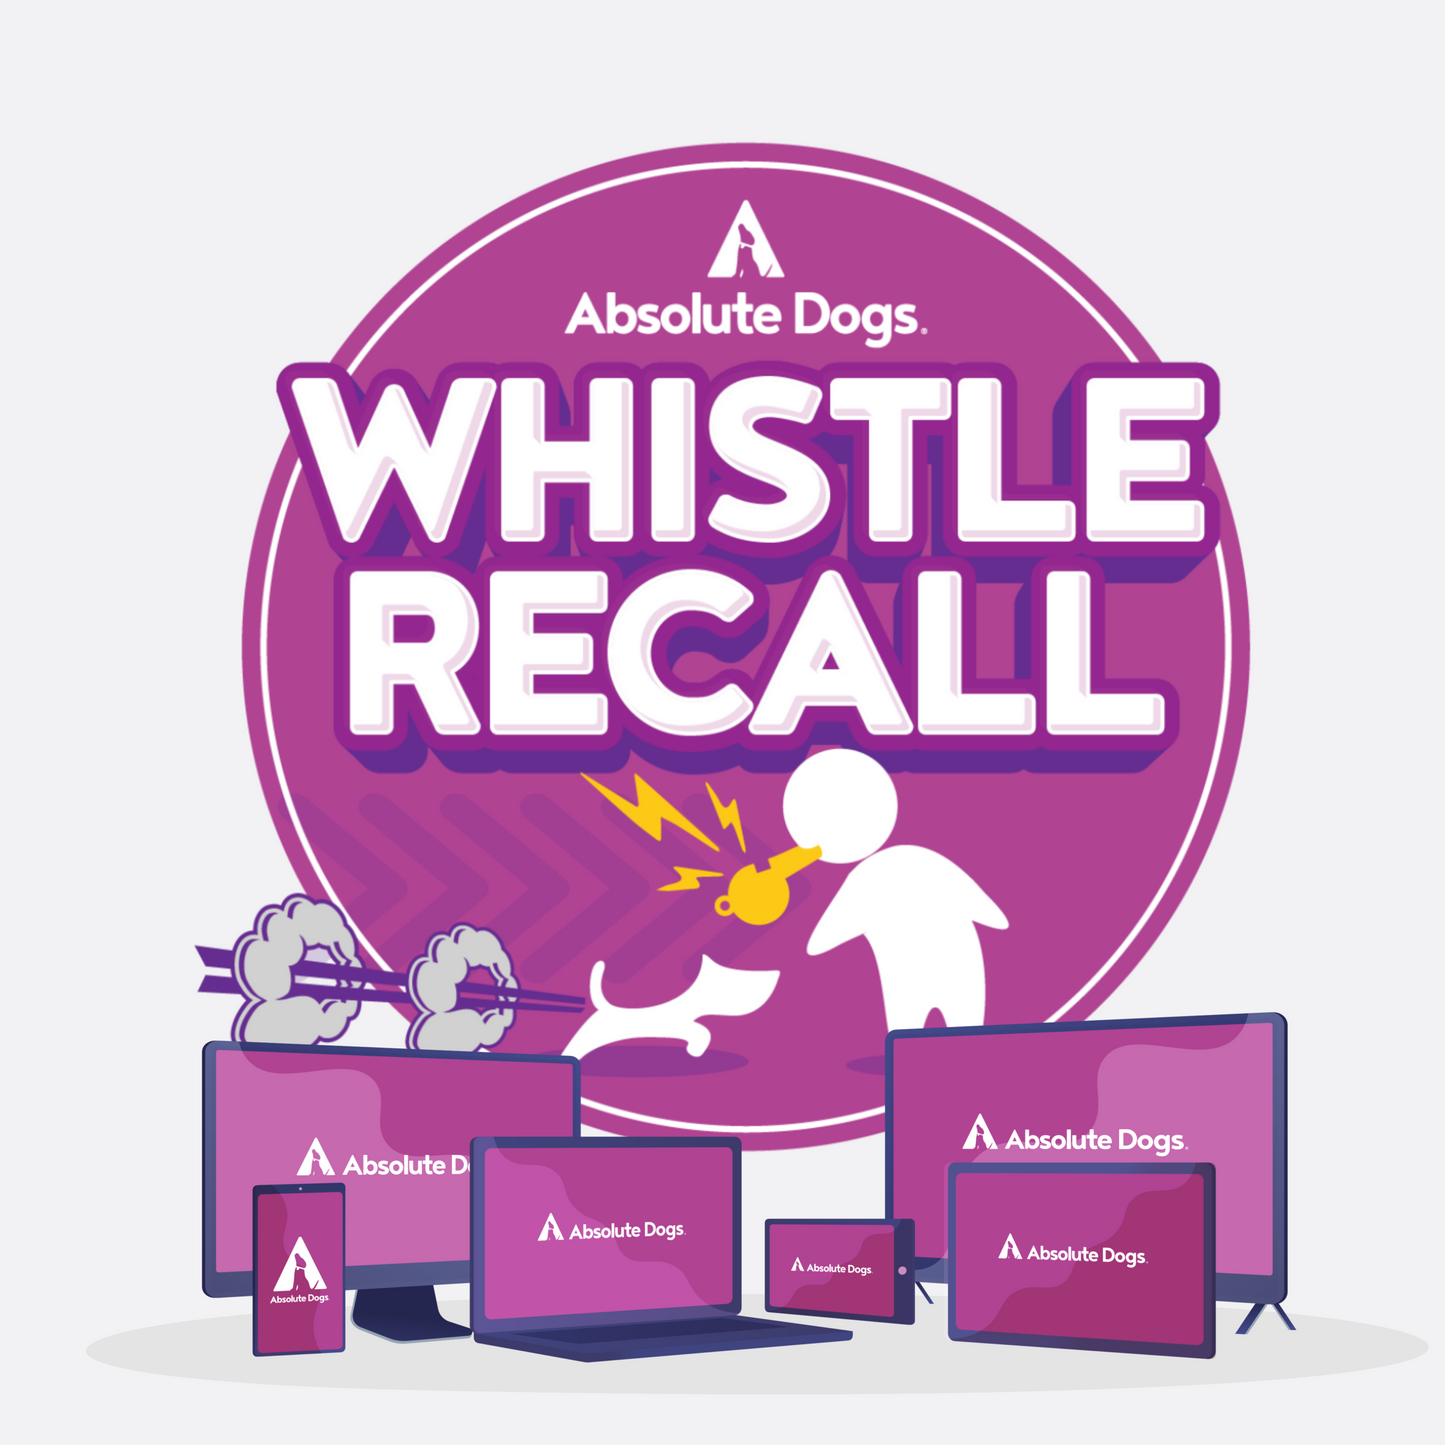 Whistle Recall